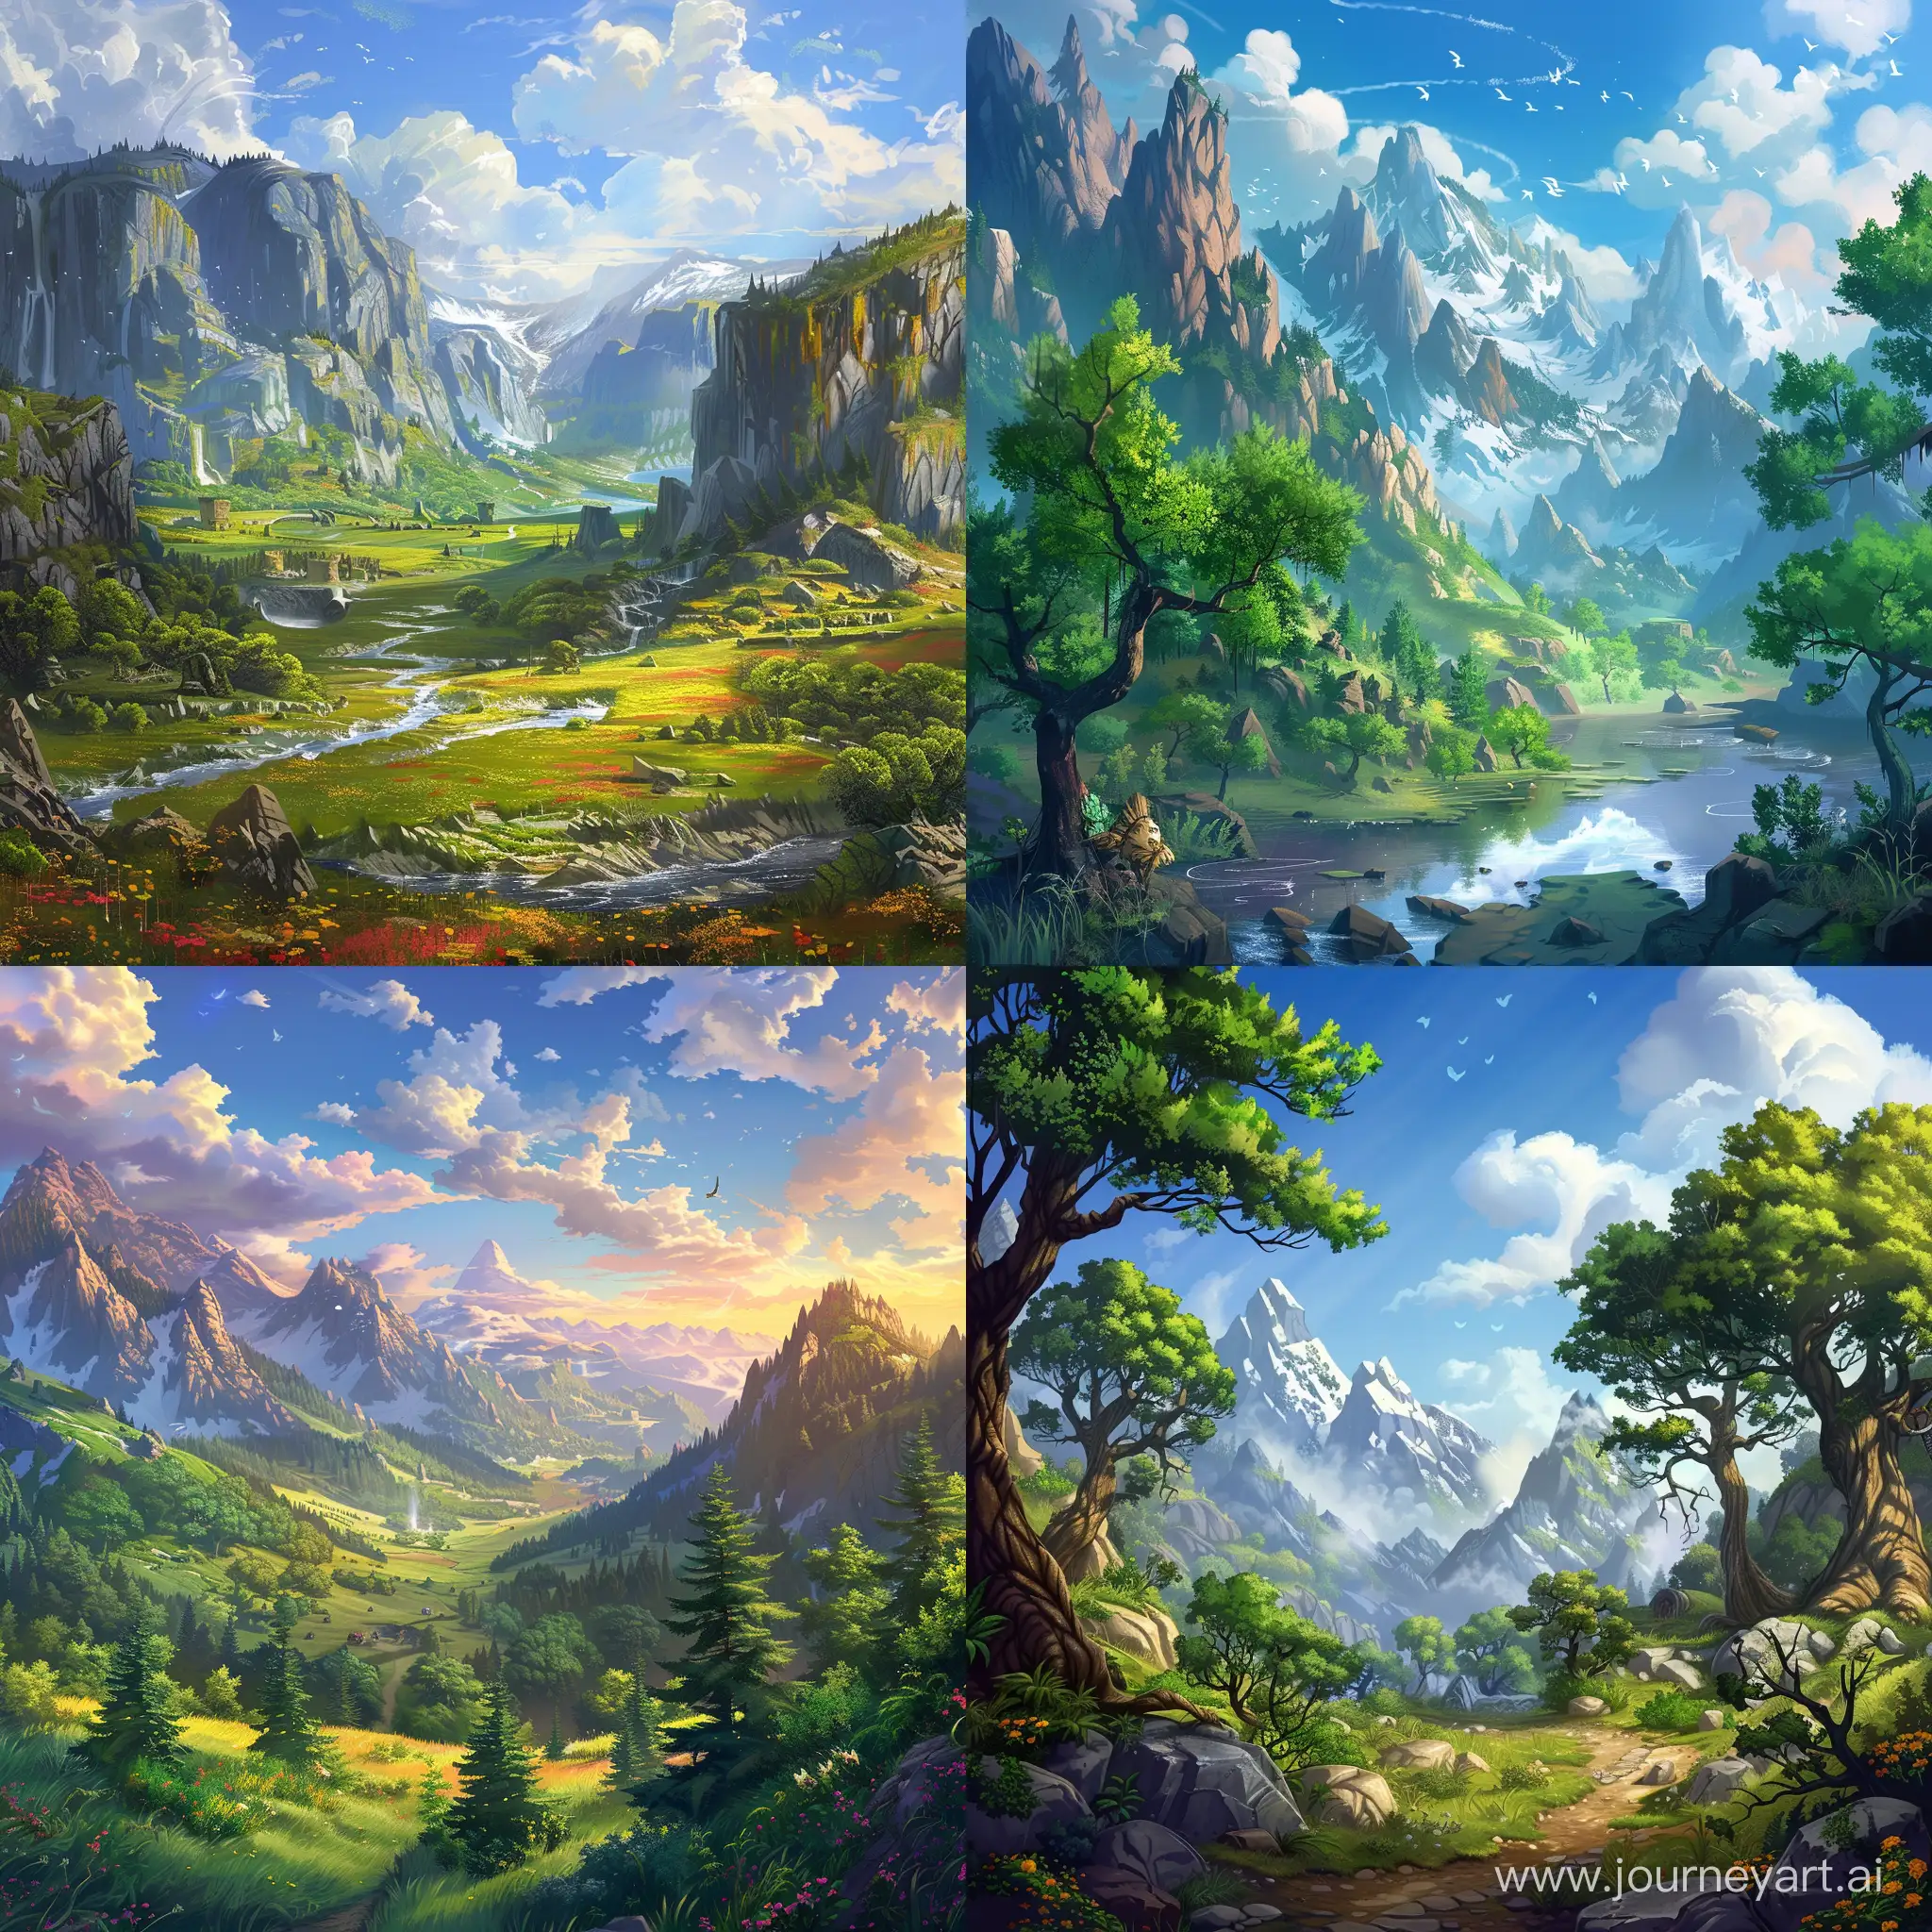 A beautiful landscape with World of Warcraft theme